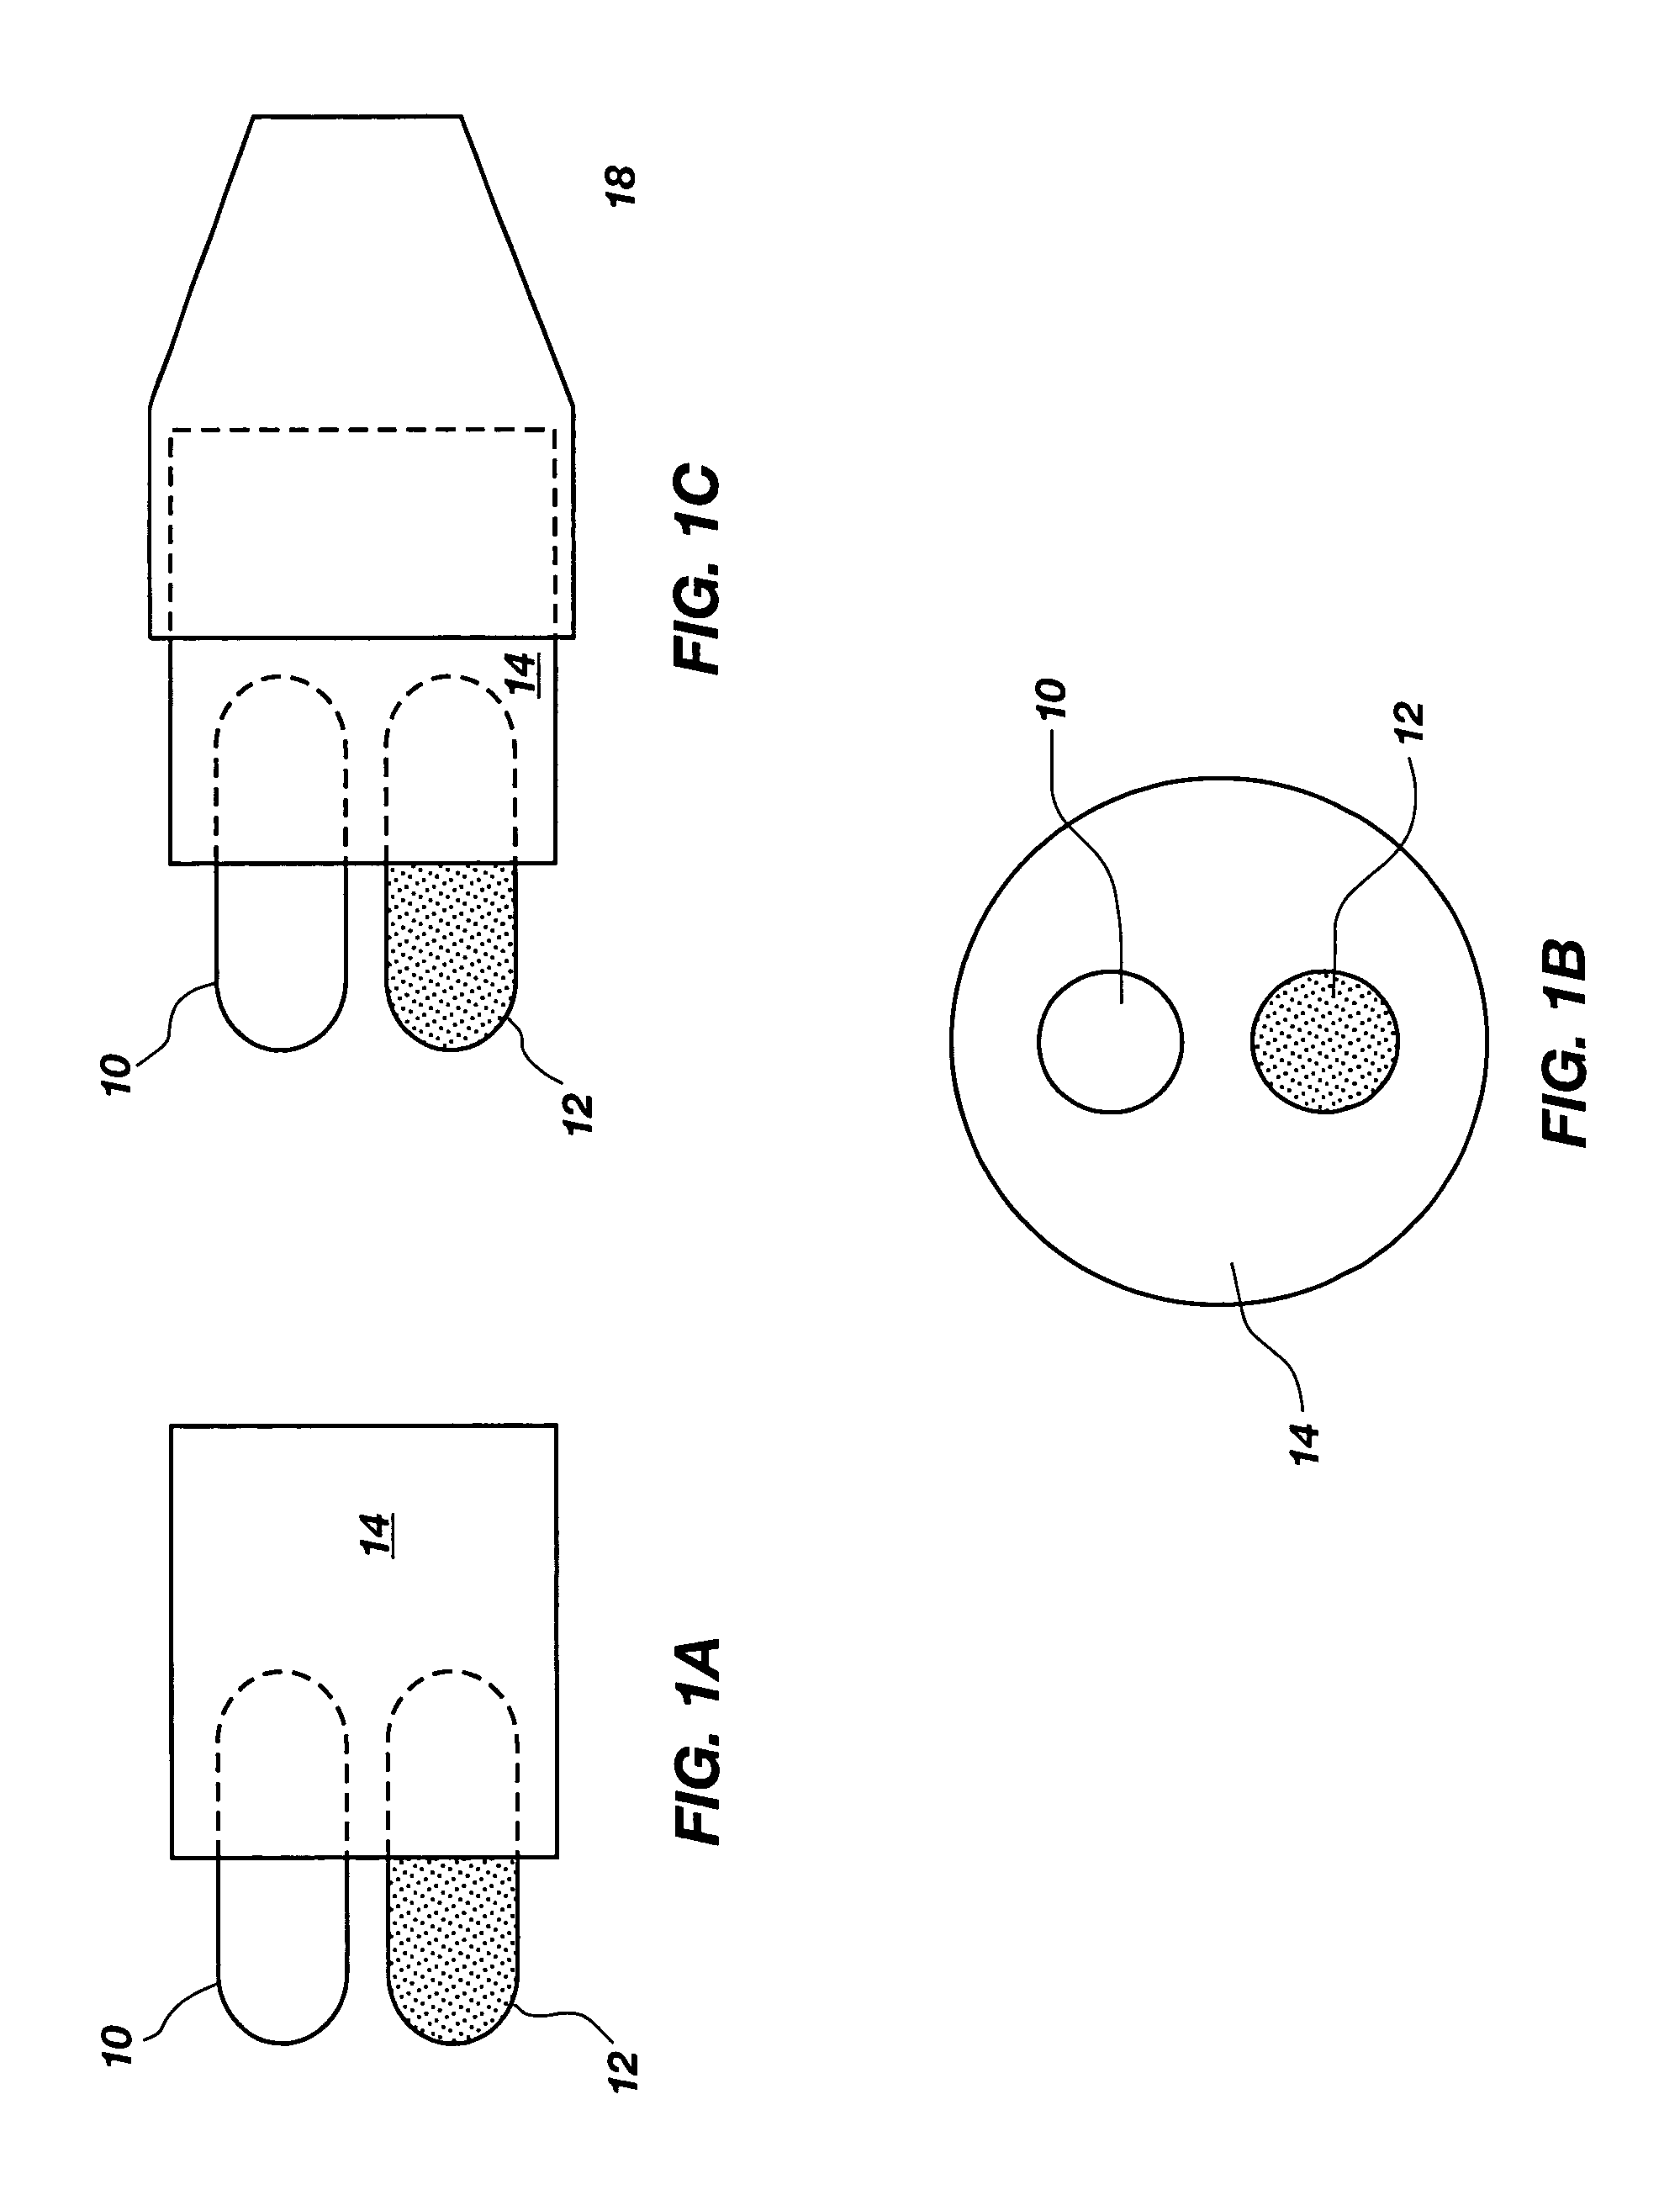 Method and apparatus for dispensing inhalator medicament